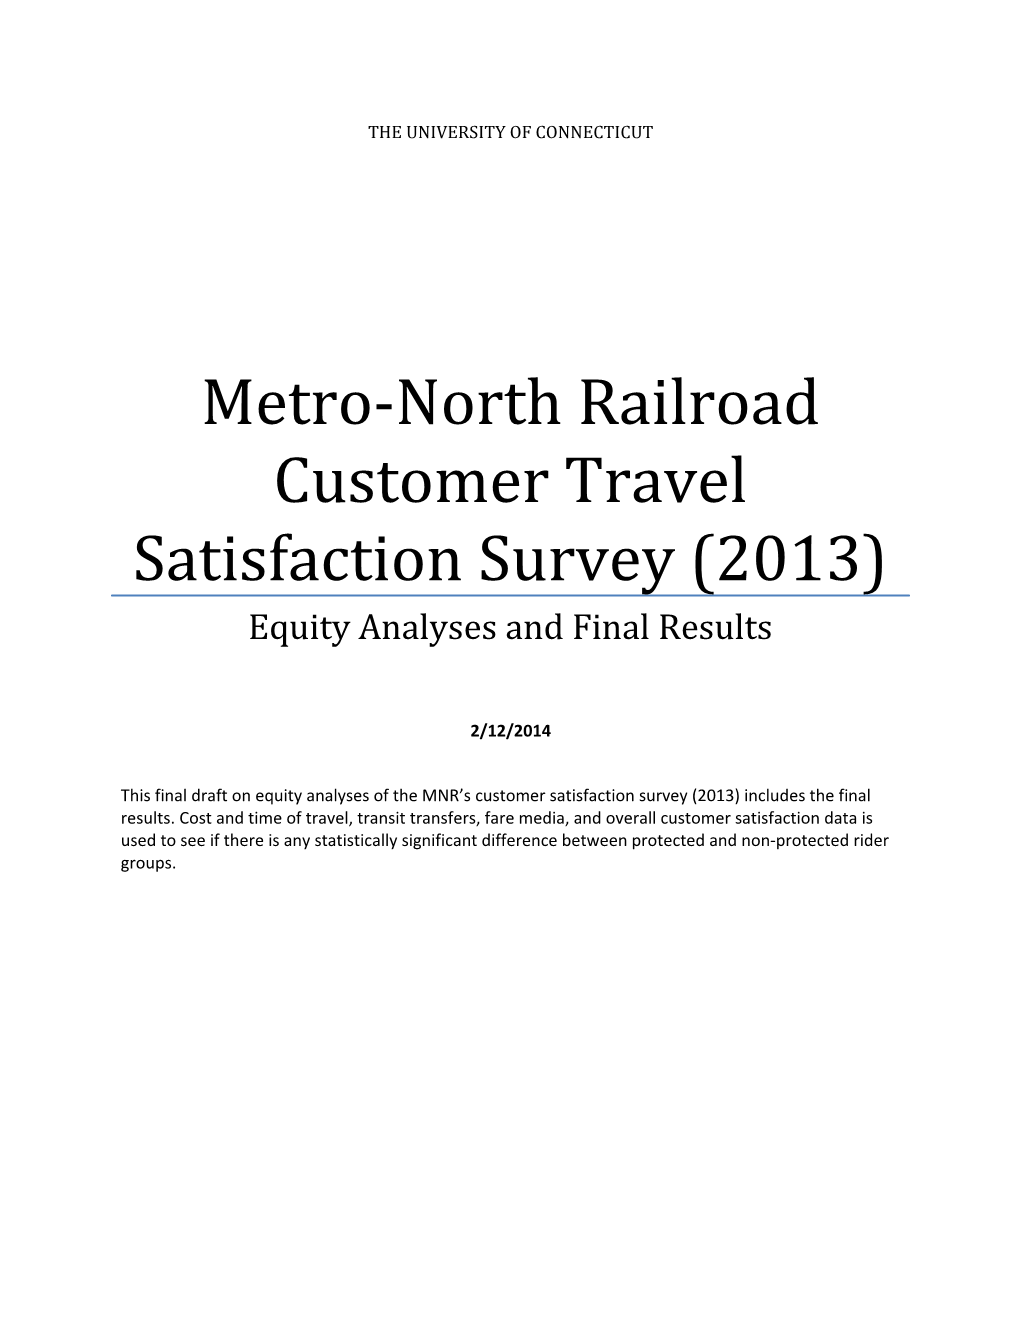 Metro-North Railroad Customer Travel Satisfaction Survey (2013)